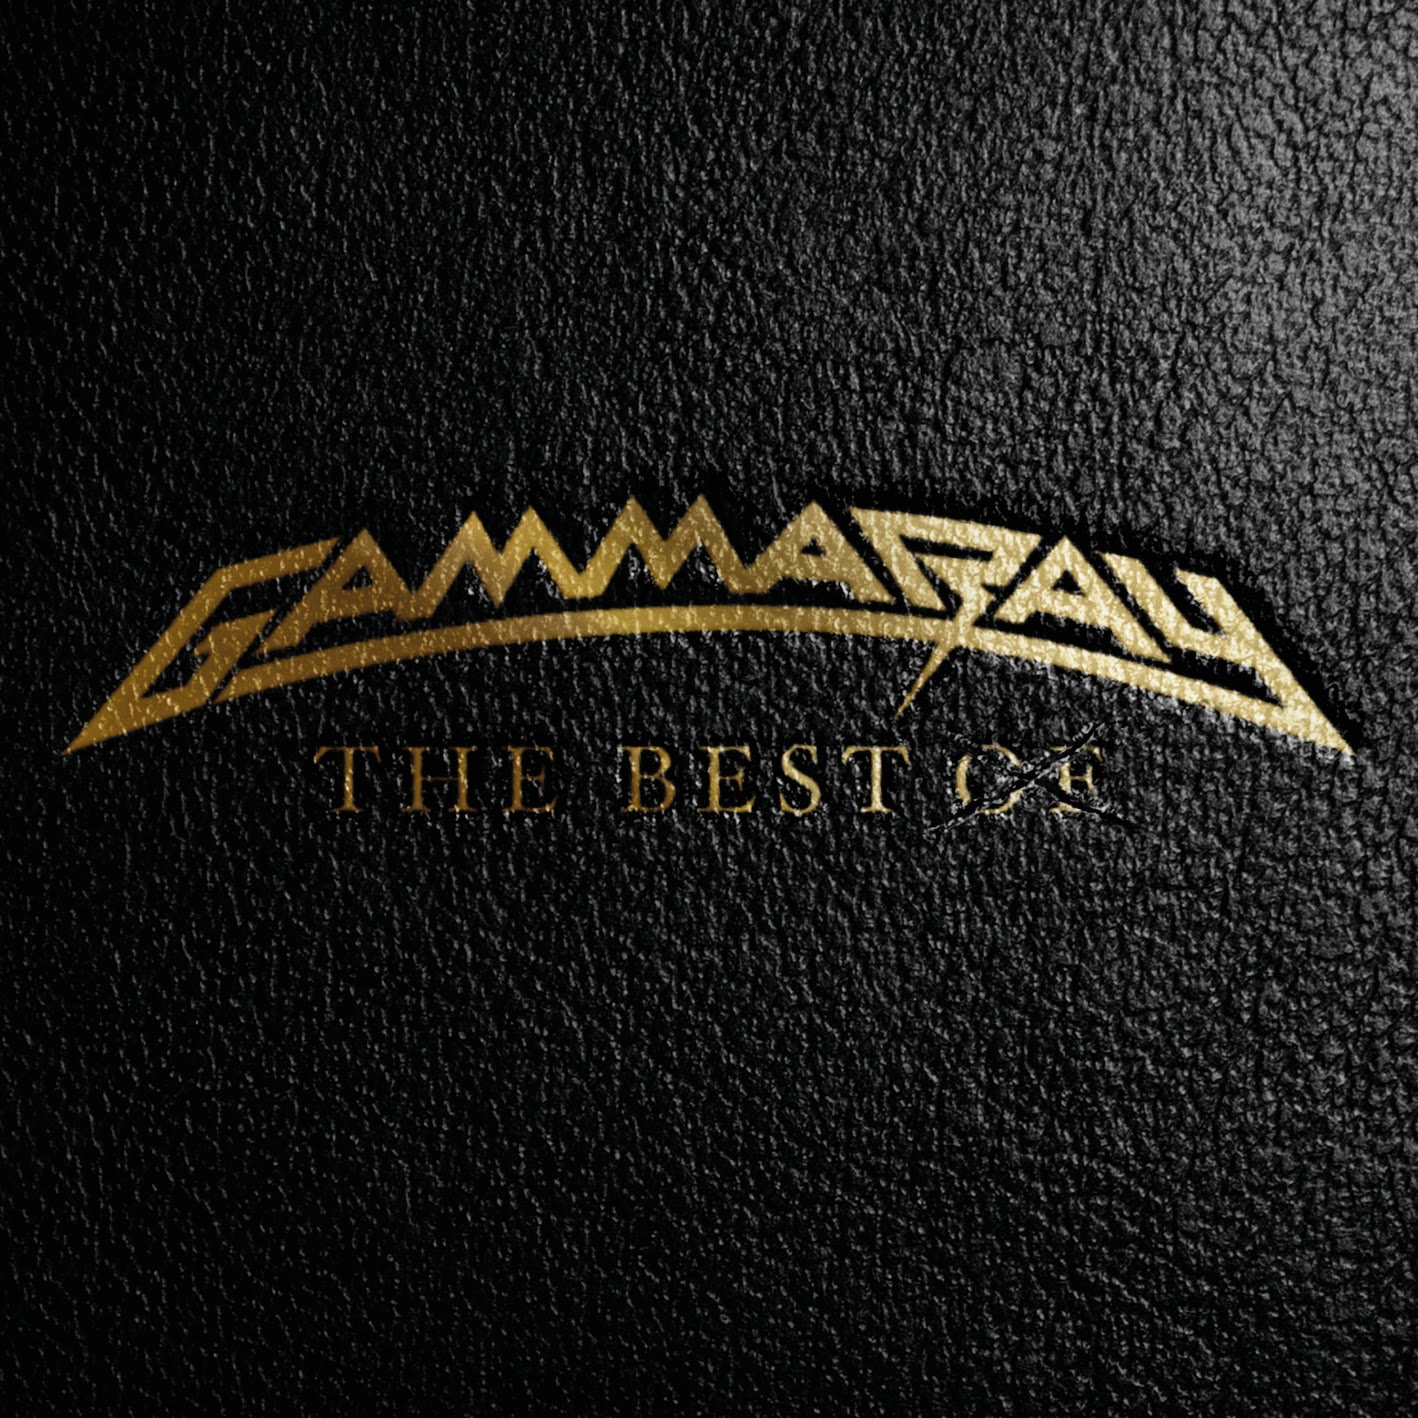 GammaRay_the_best_of